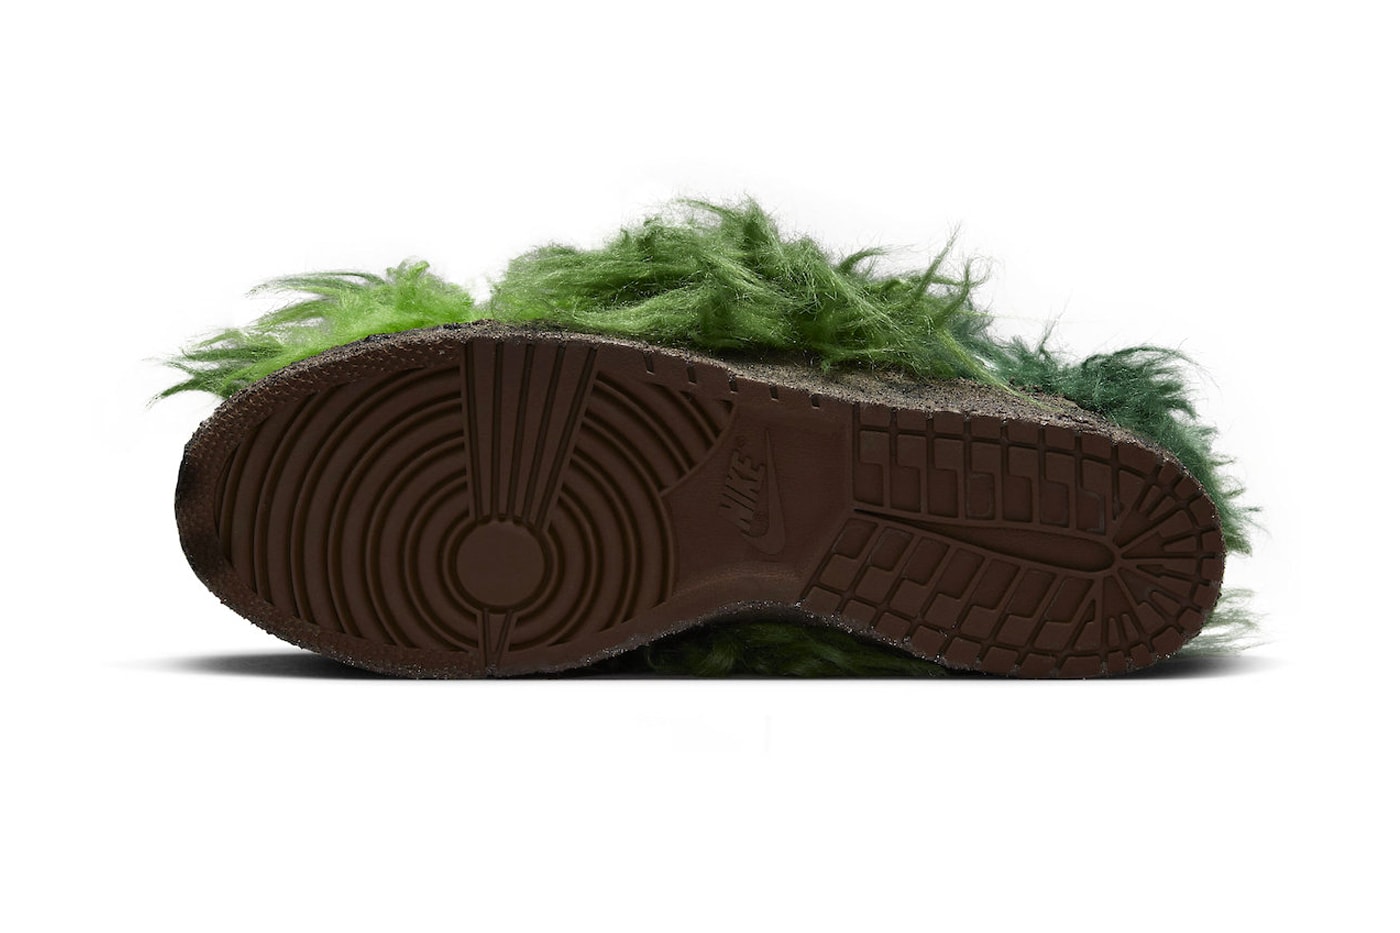 Nike x Cactus Plant Flea Market Nike Flea 1 Forest Green